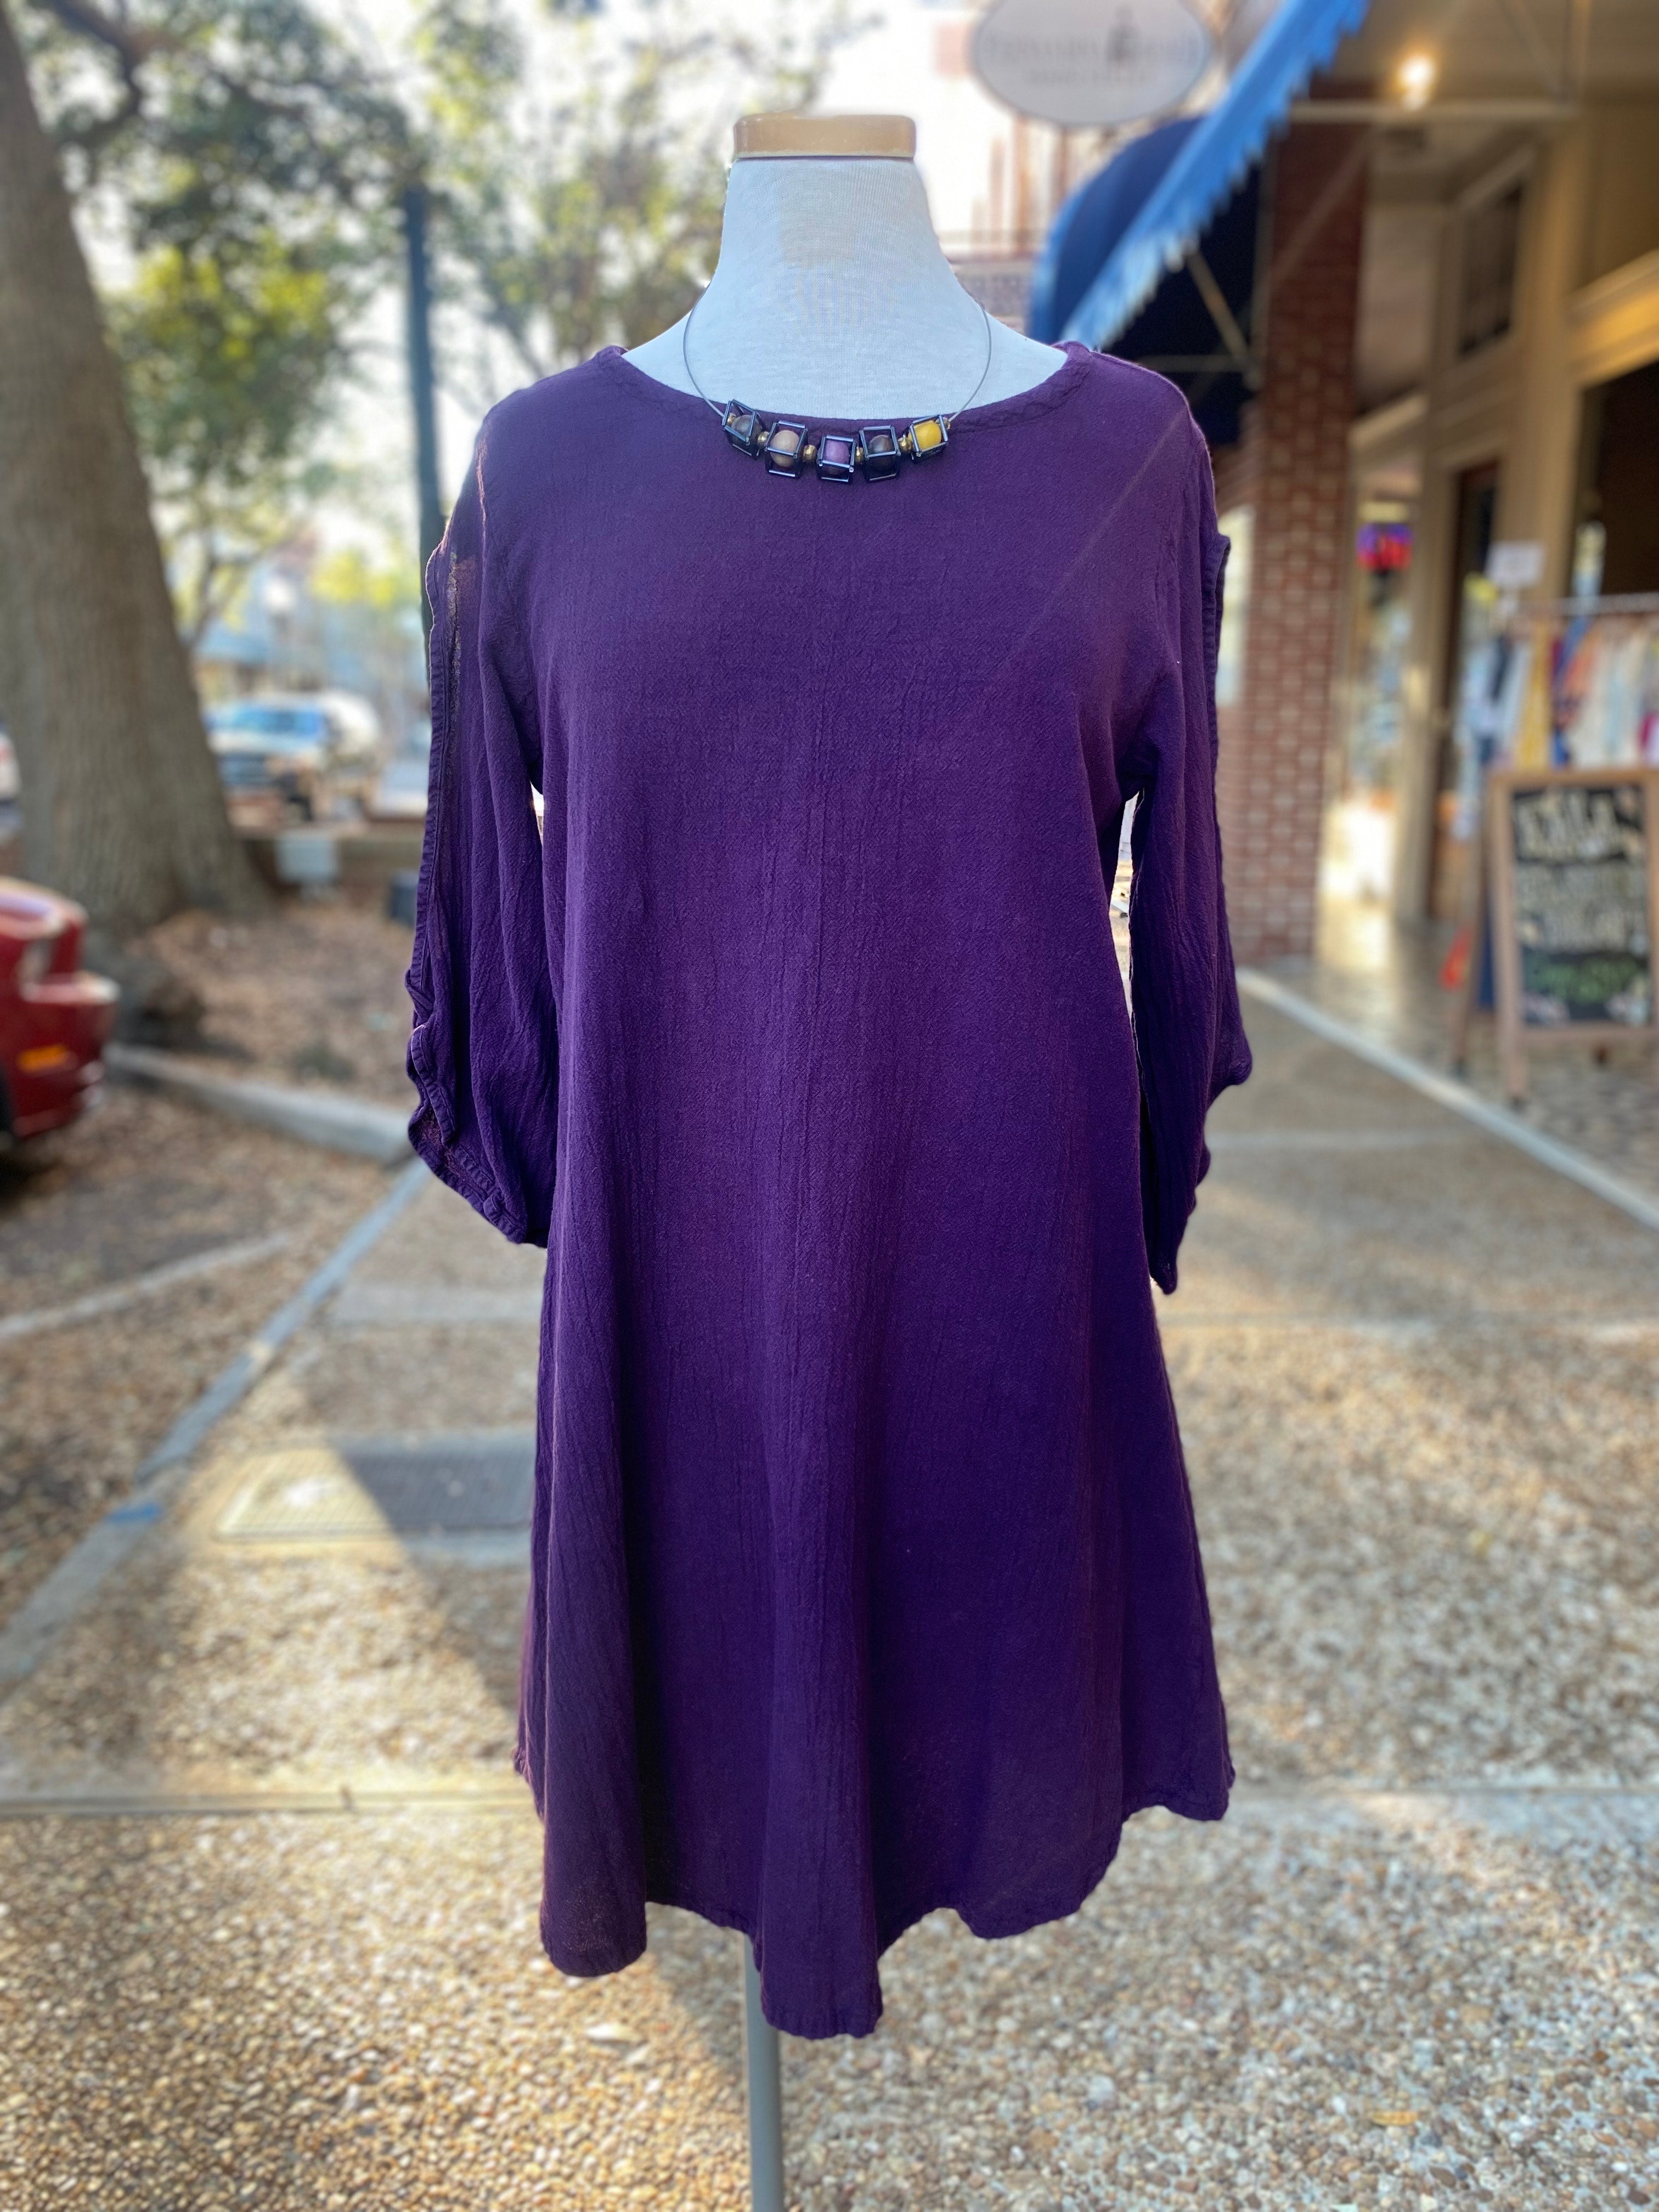 Teri Cold Shoulder Tunic, Top & Dress In Sale Colors